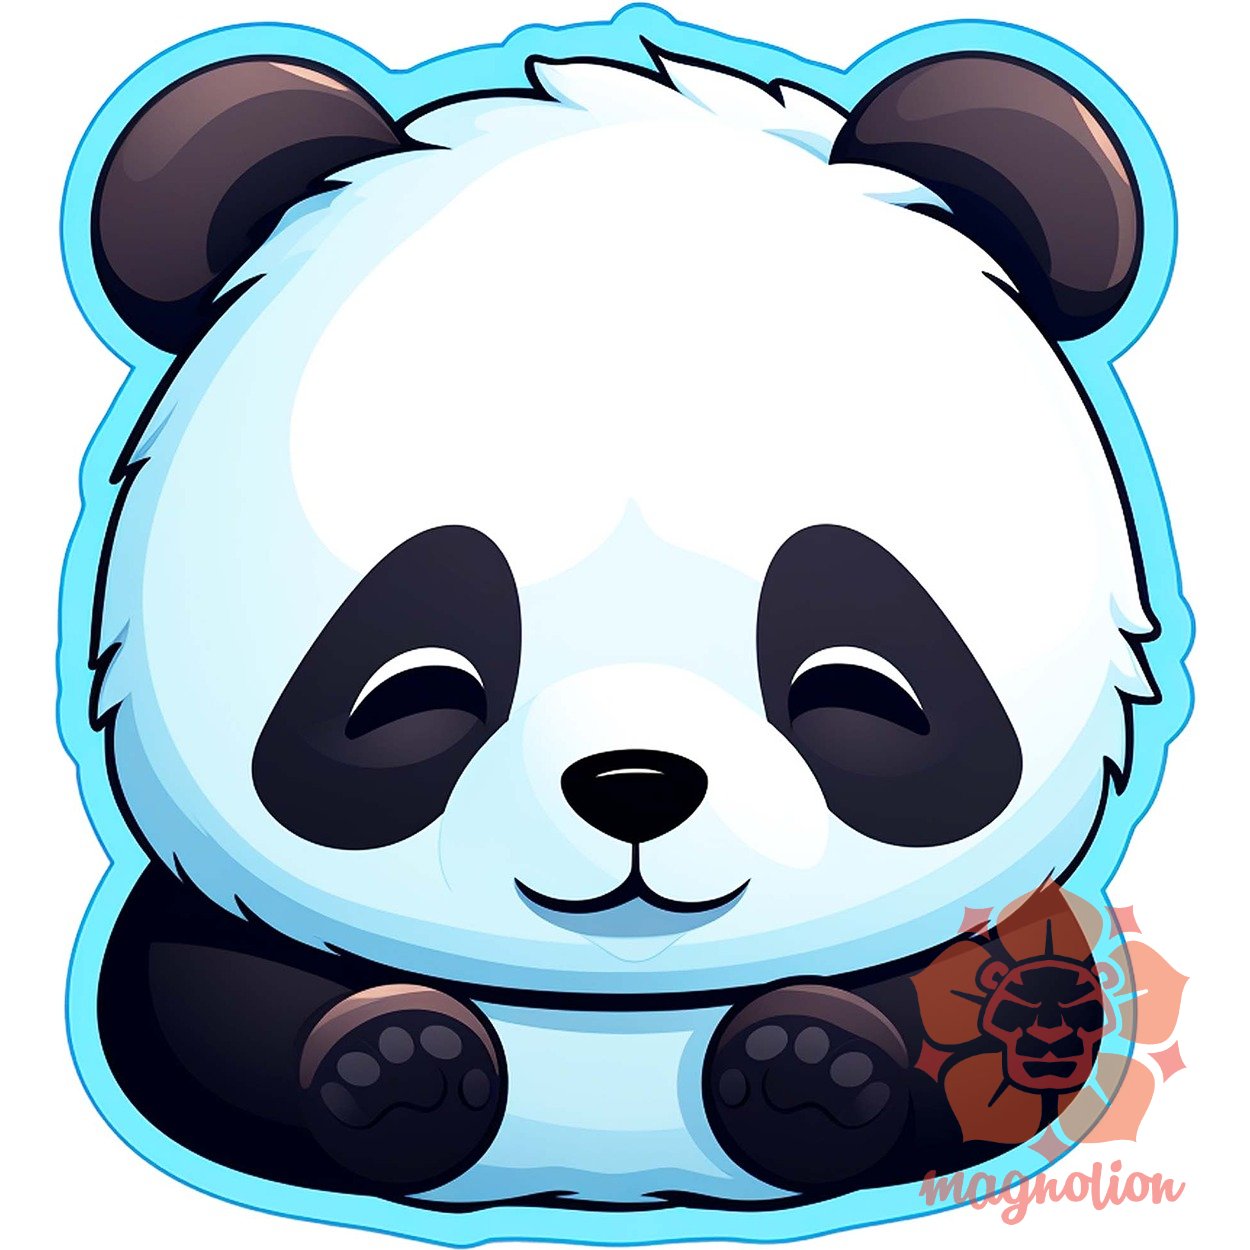 Kawaii panda v1